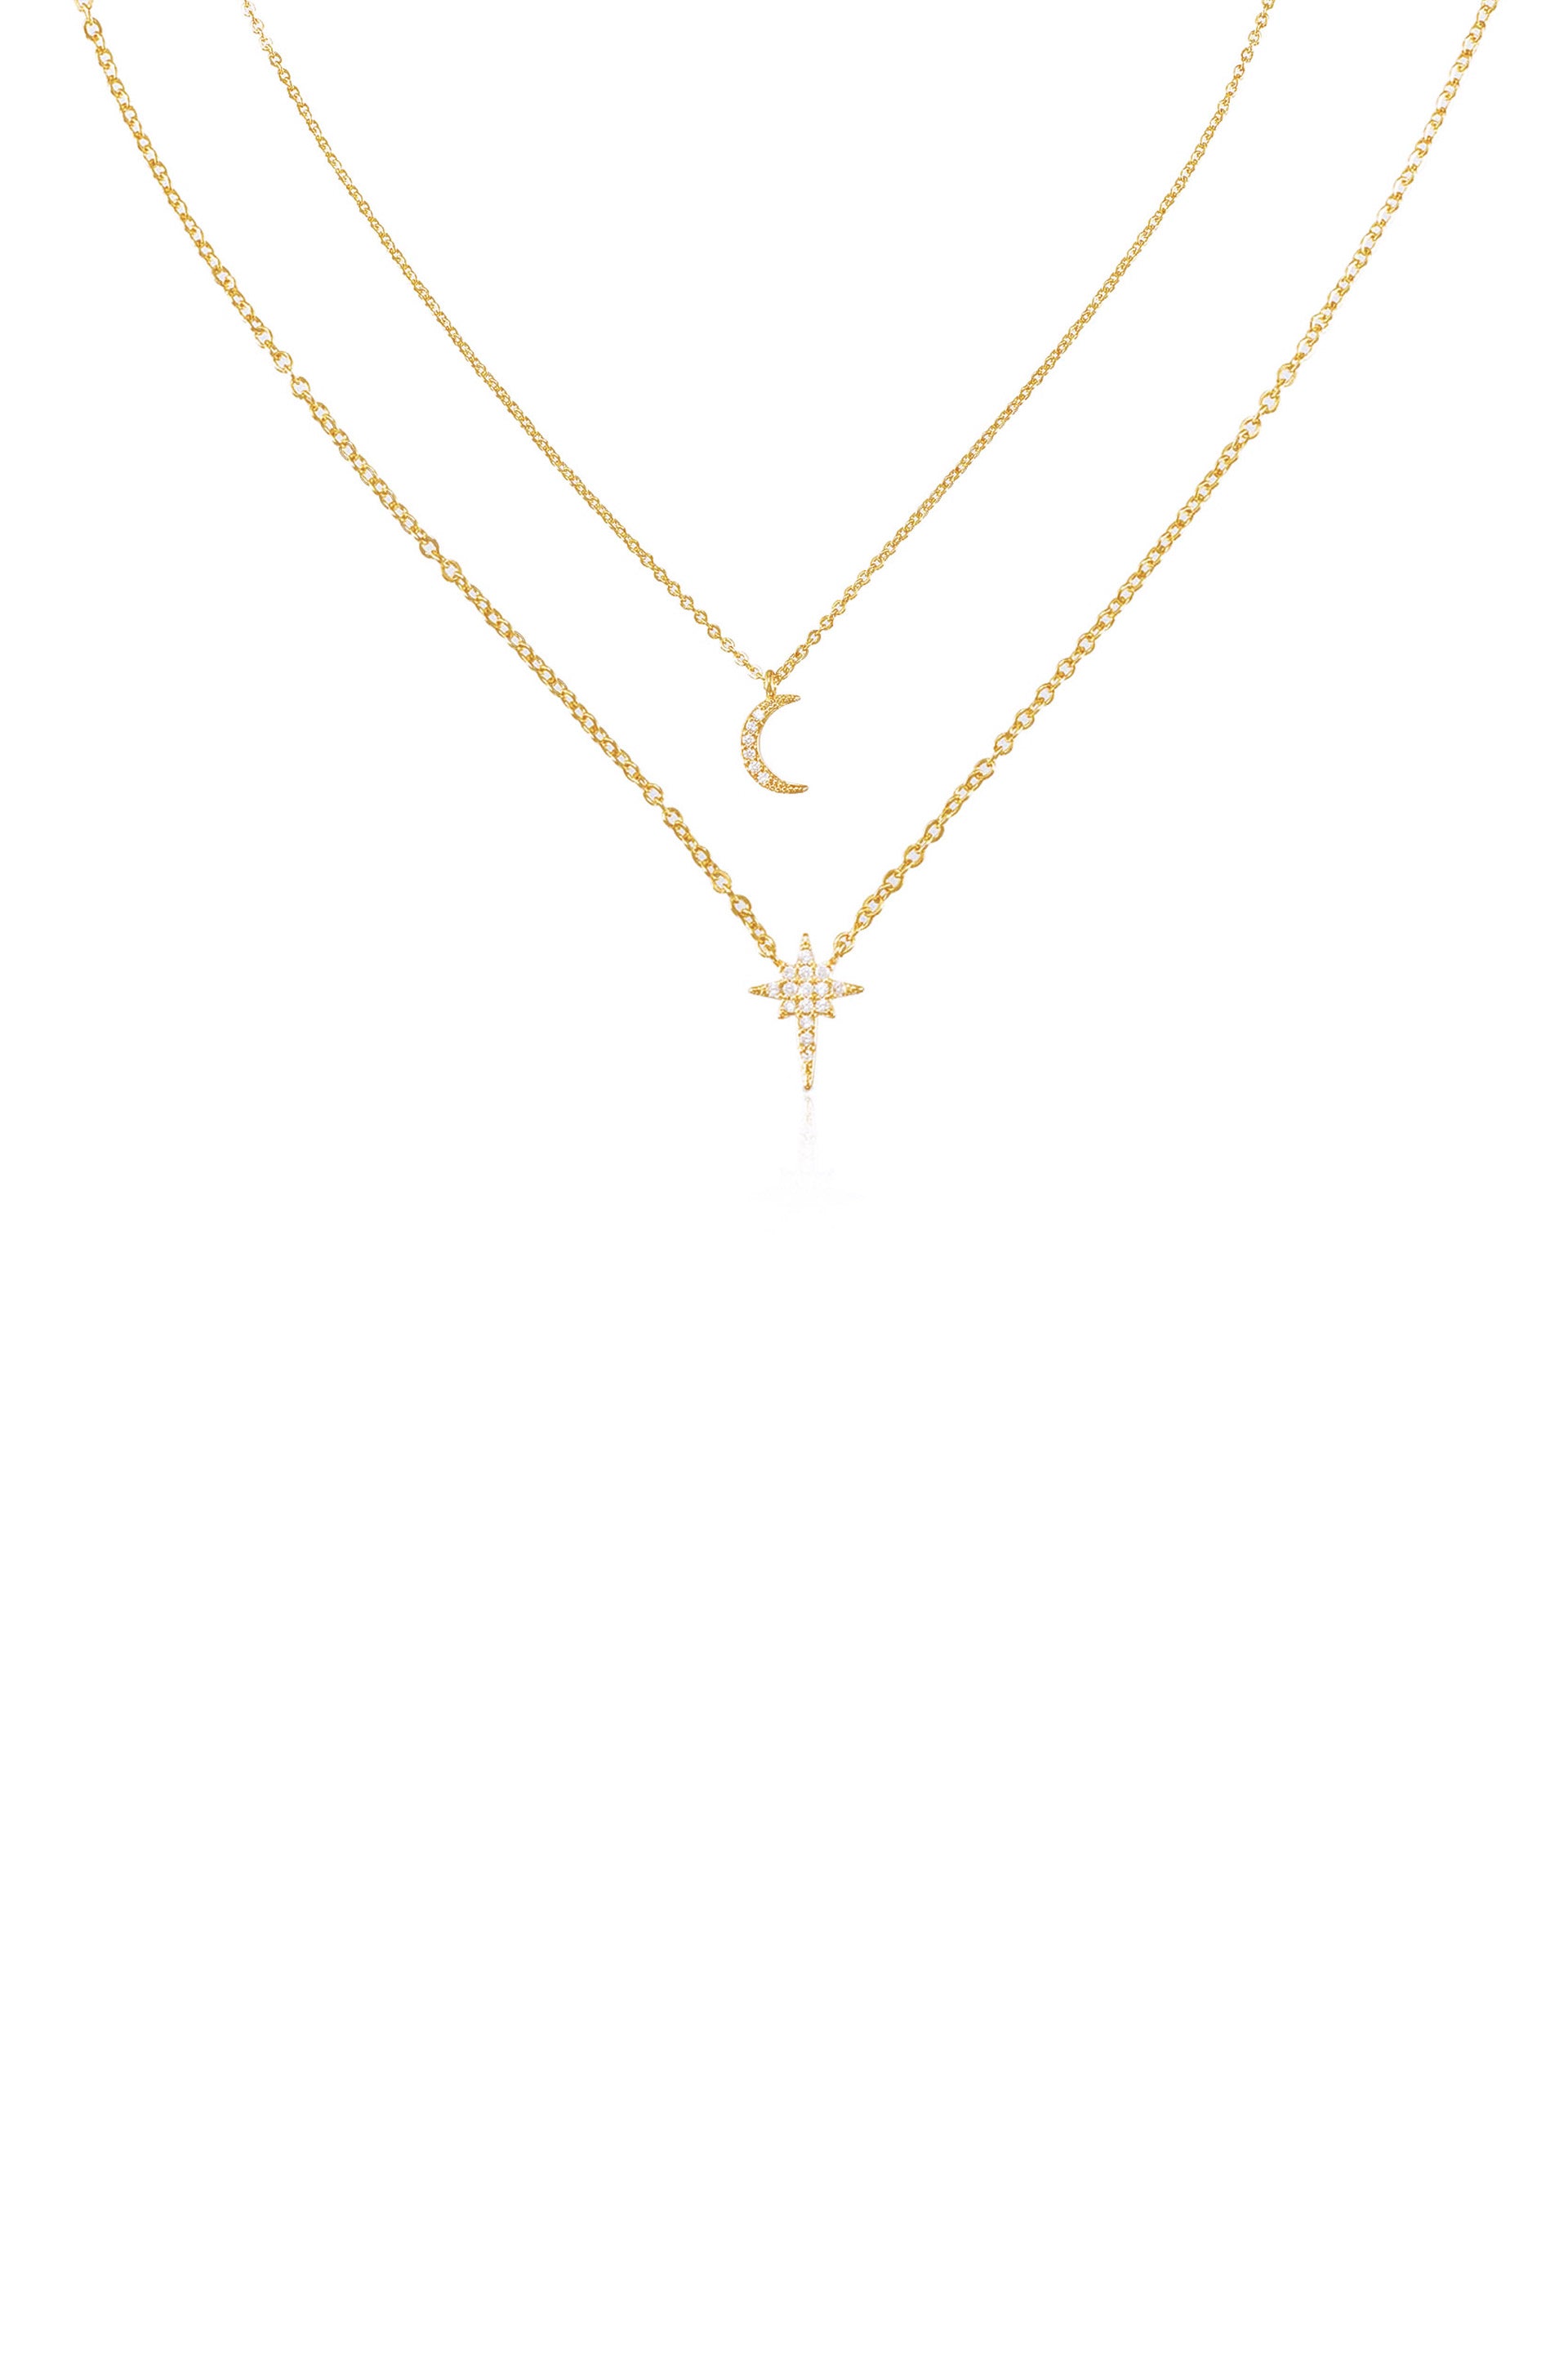 Celestial Crystal 18k Gold Plated Necklace Set